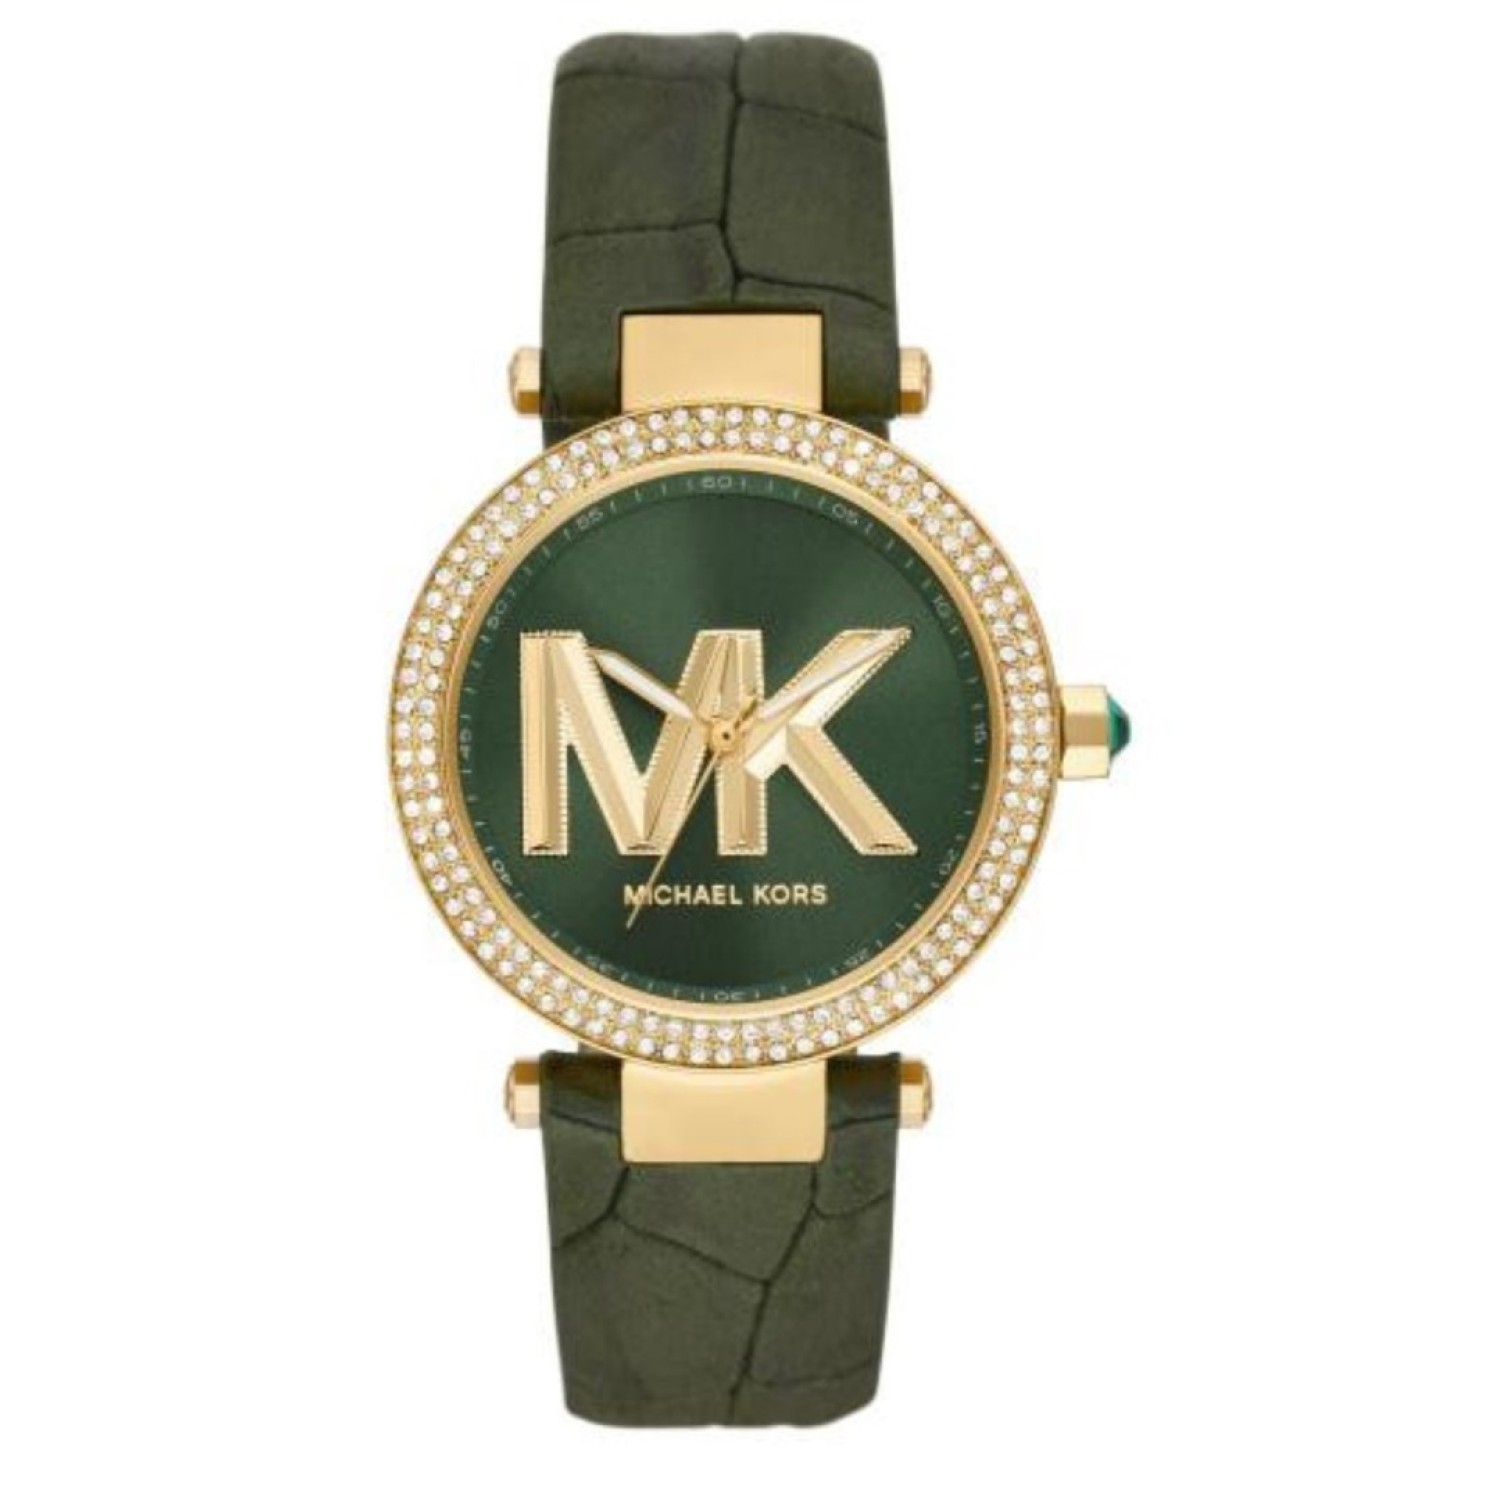 MK4724 MICHAEL KORS PARKER GOLD-TONE GREEN LEATHER WATCH MK4725 Watches NZ